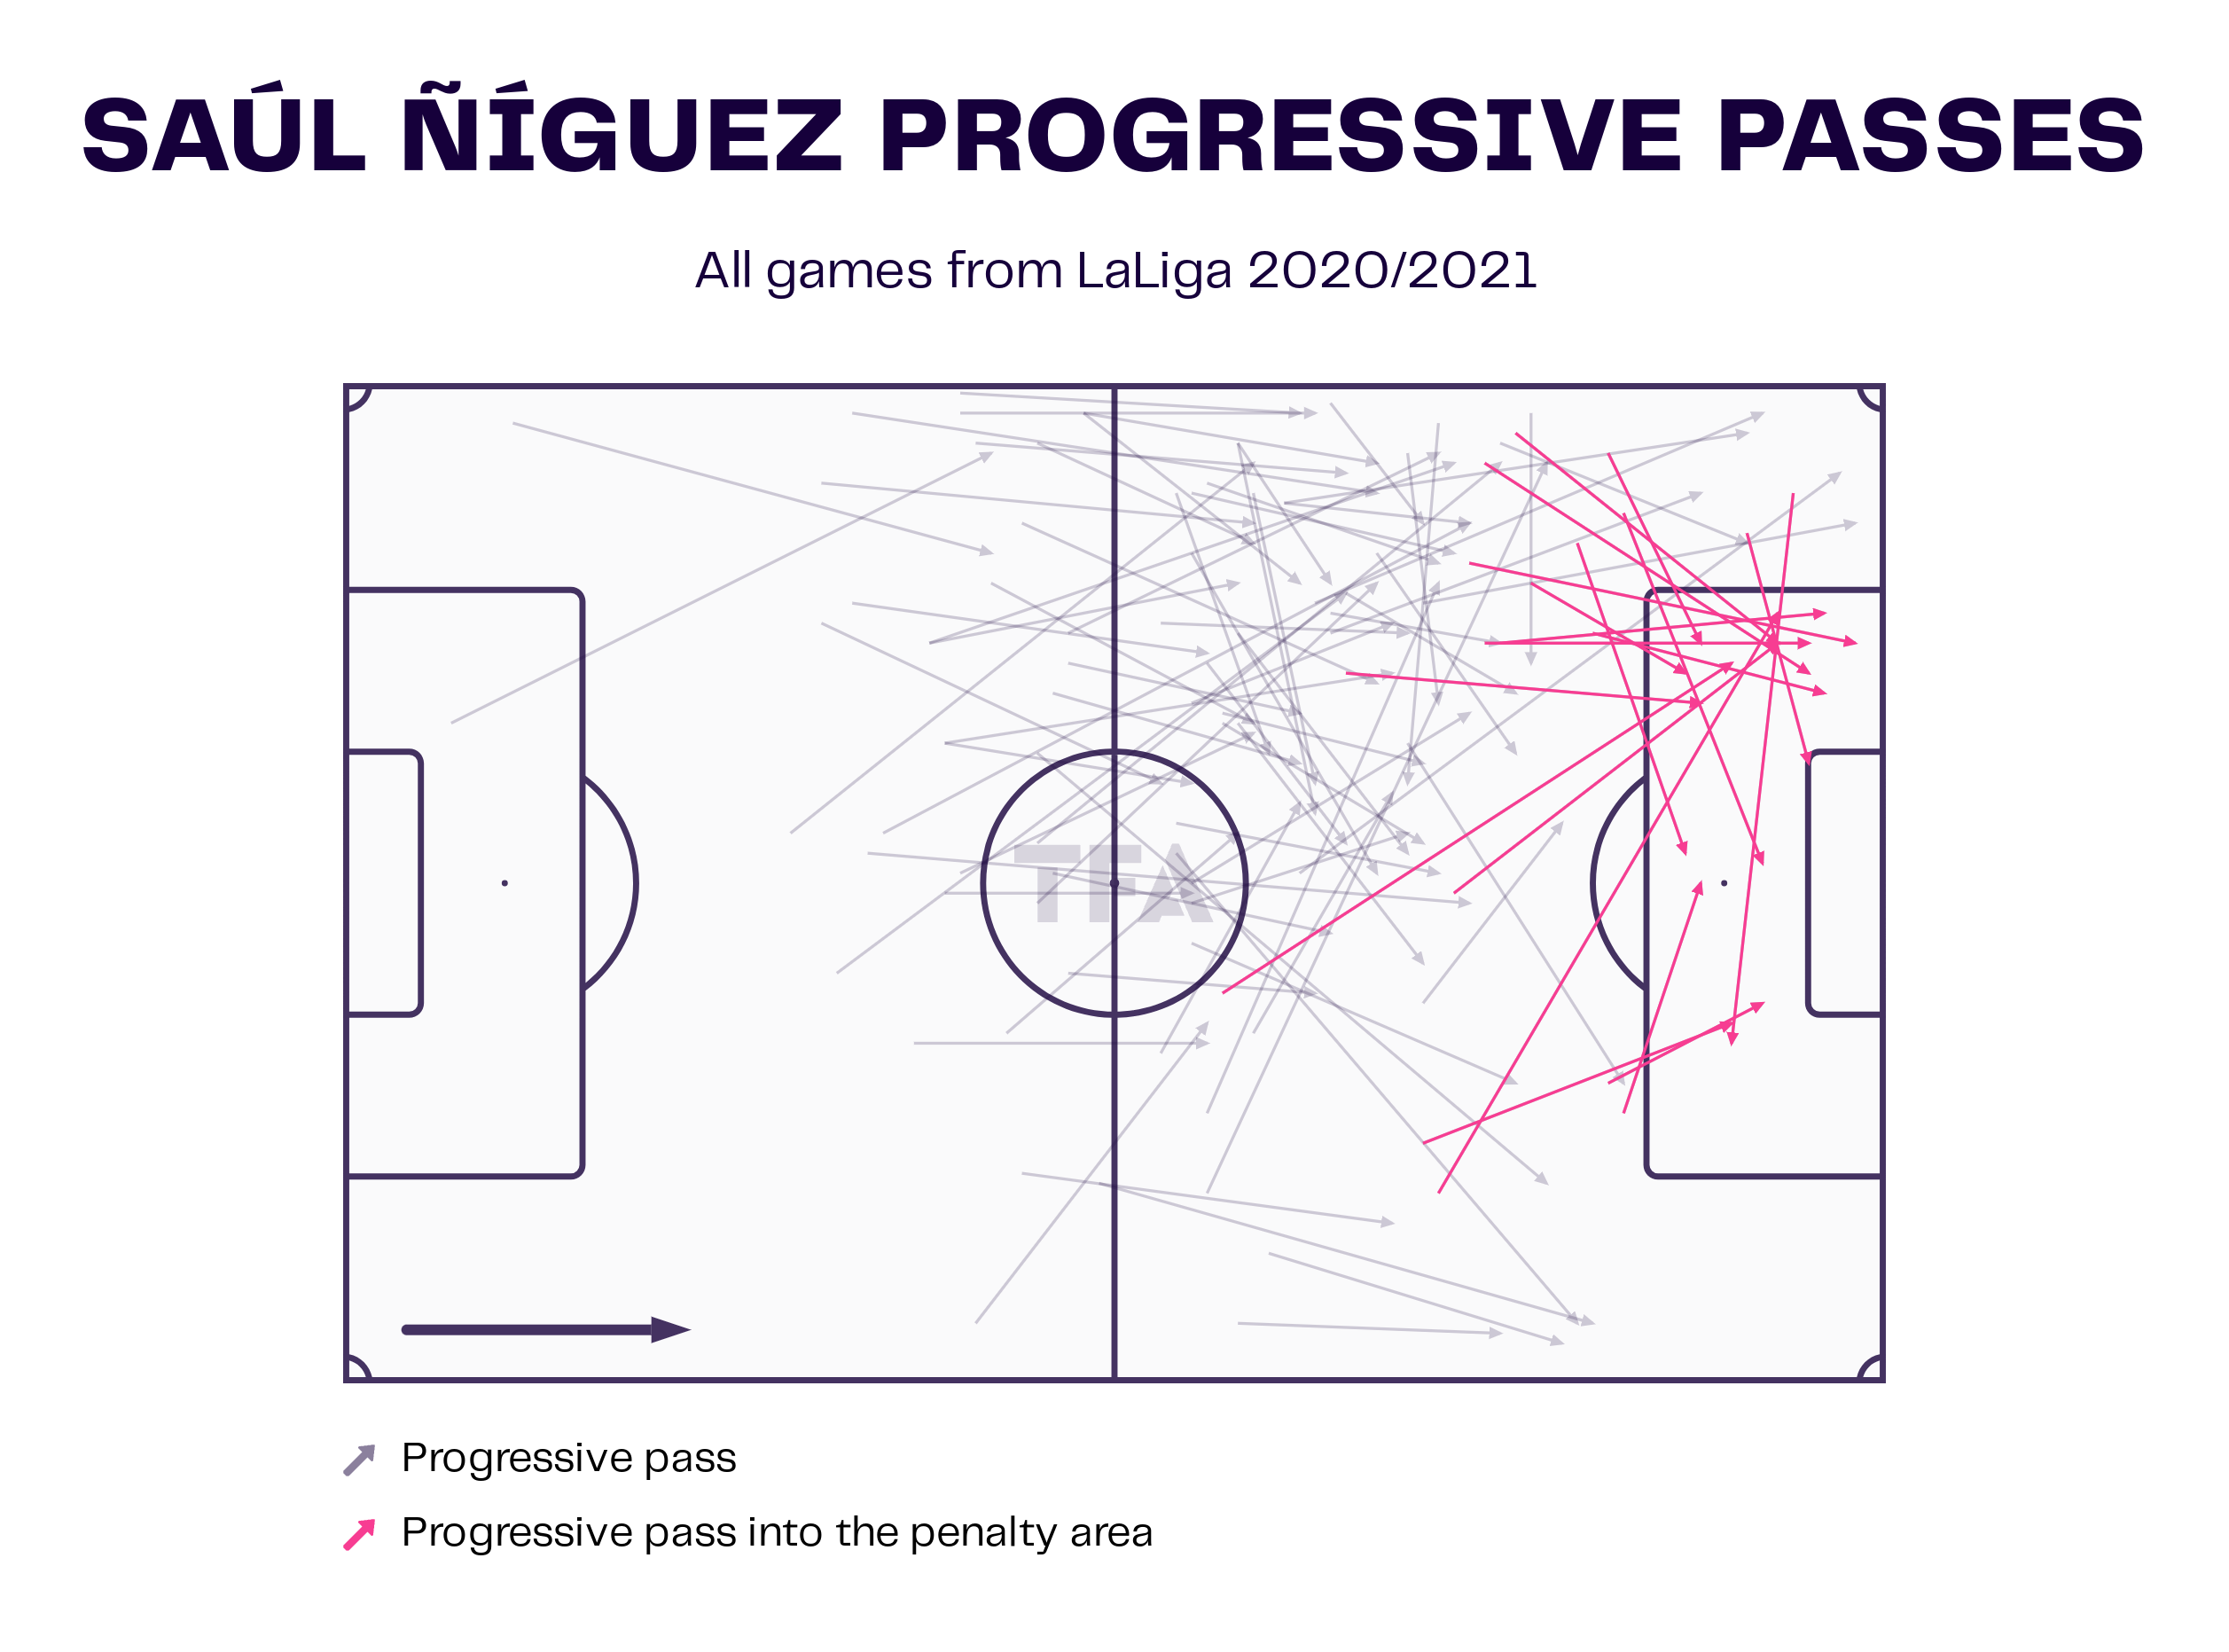 Saul Niguez - Atletico Madrid: La Liga 2022/23 Data, statistics, analysis and scouting report